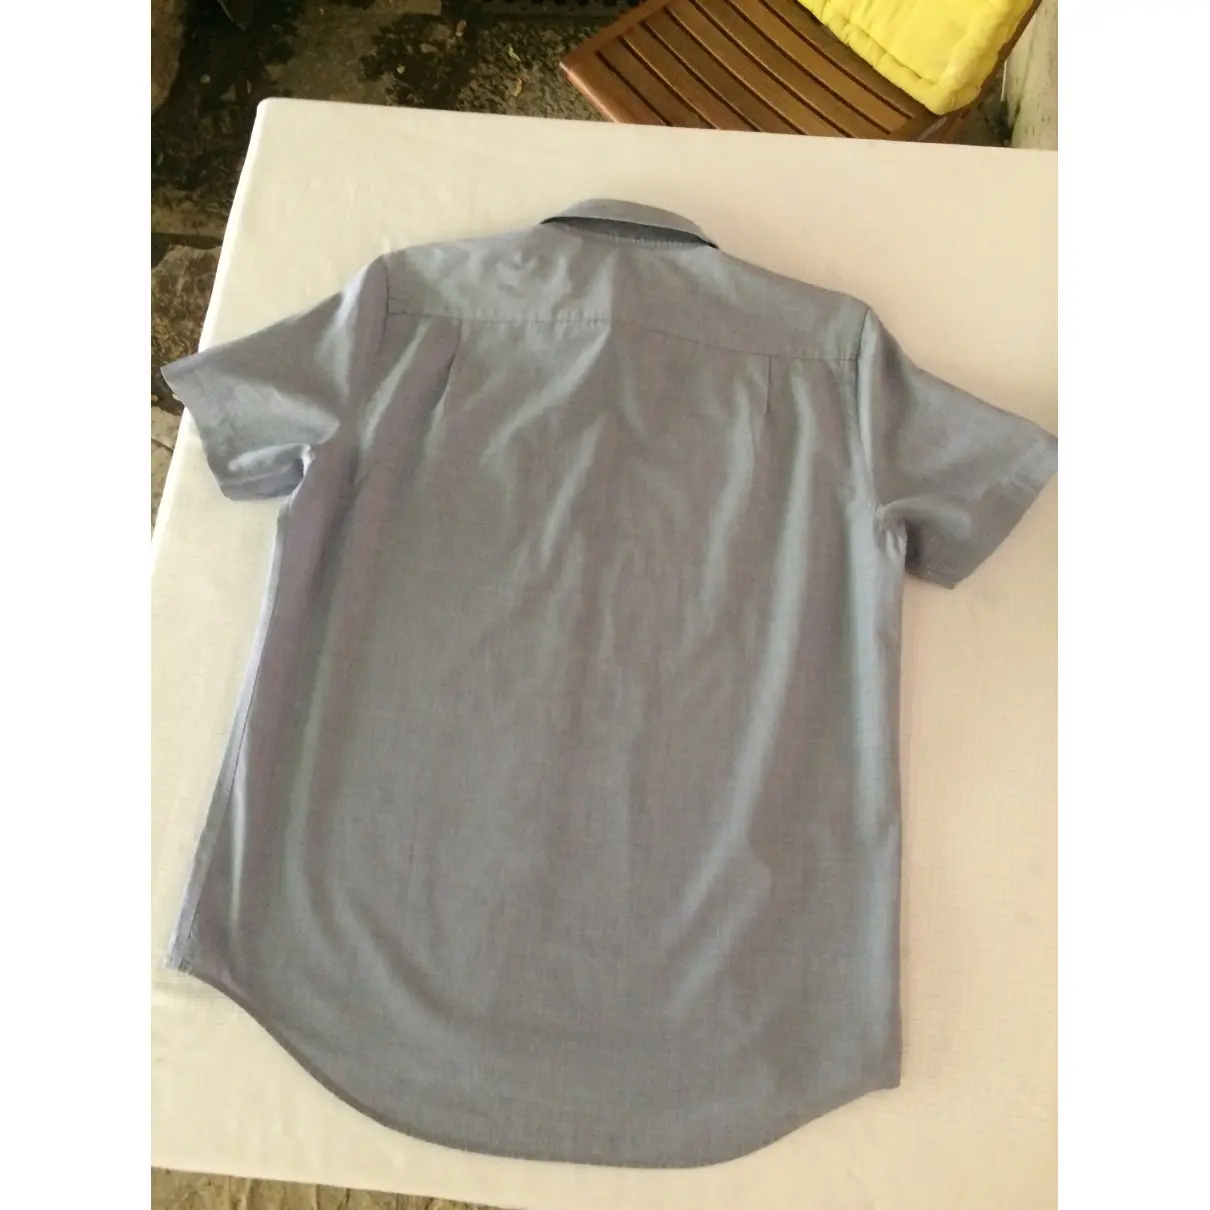 Buy Lacoste Shirt online